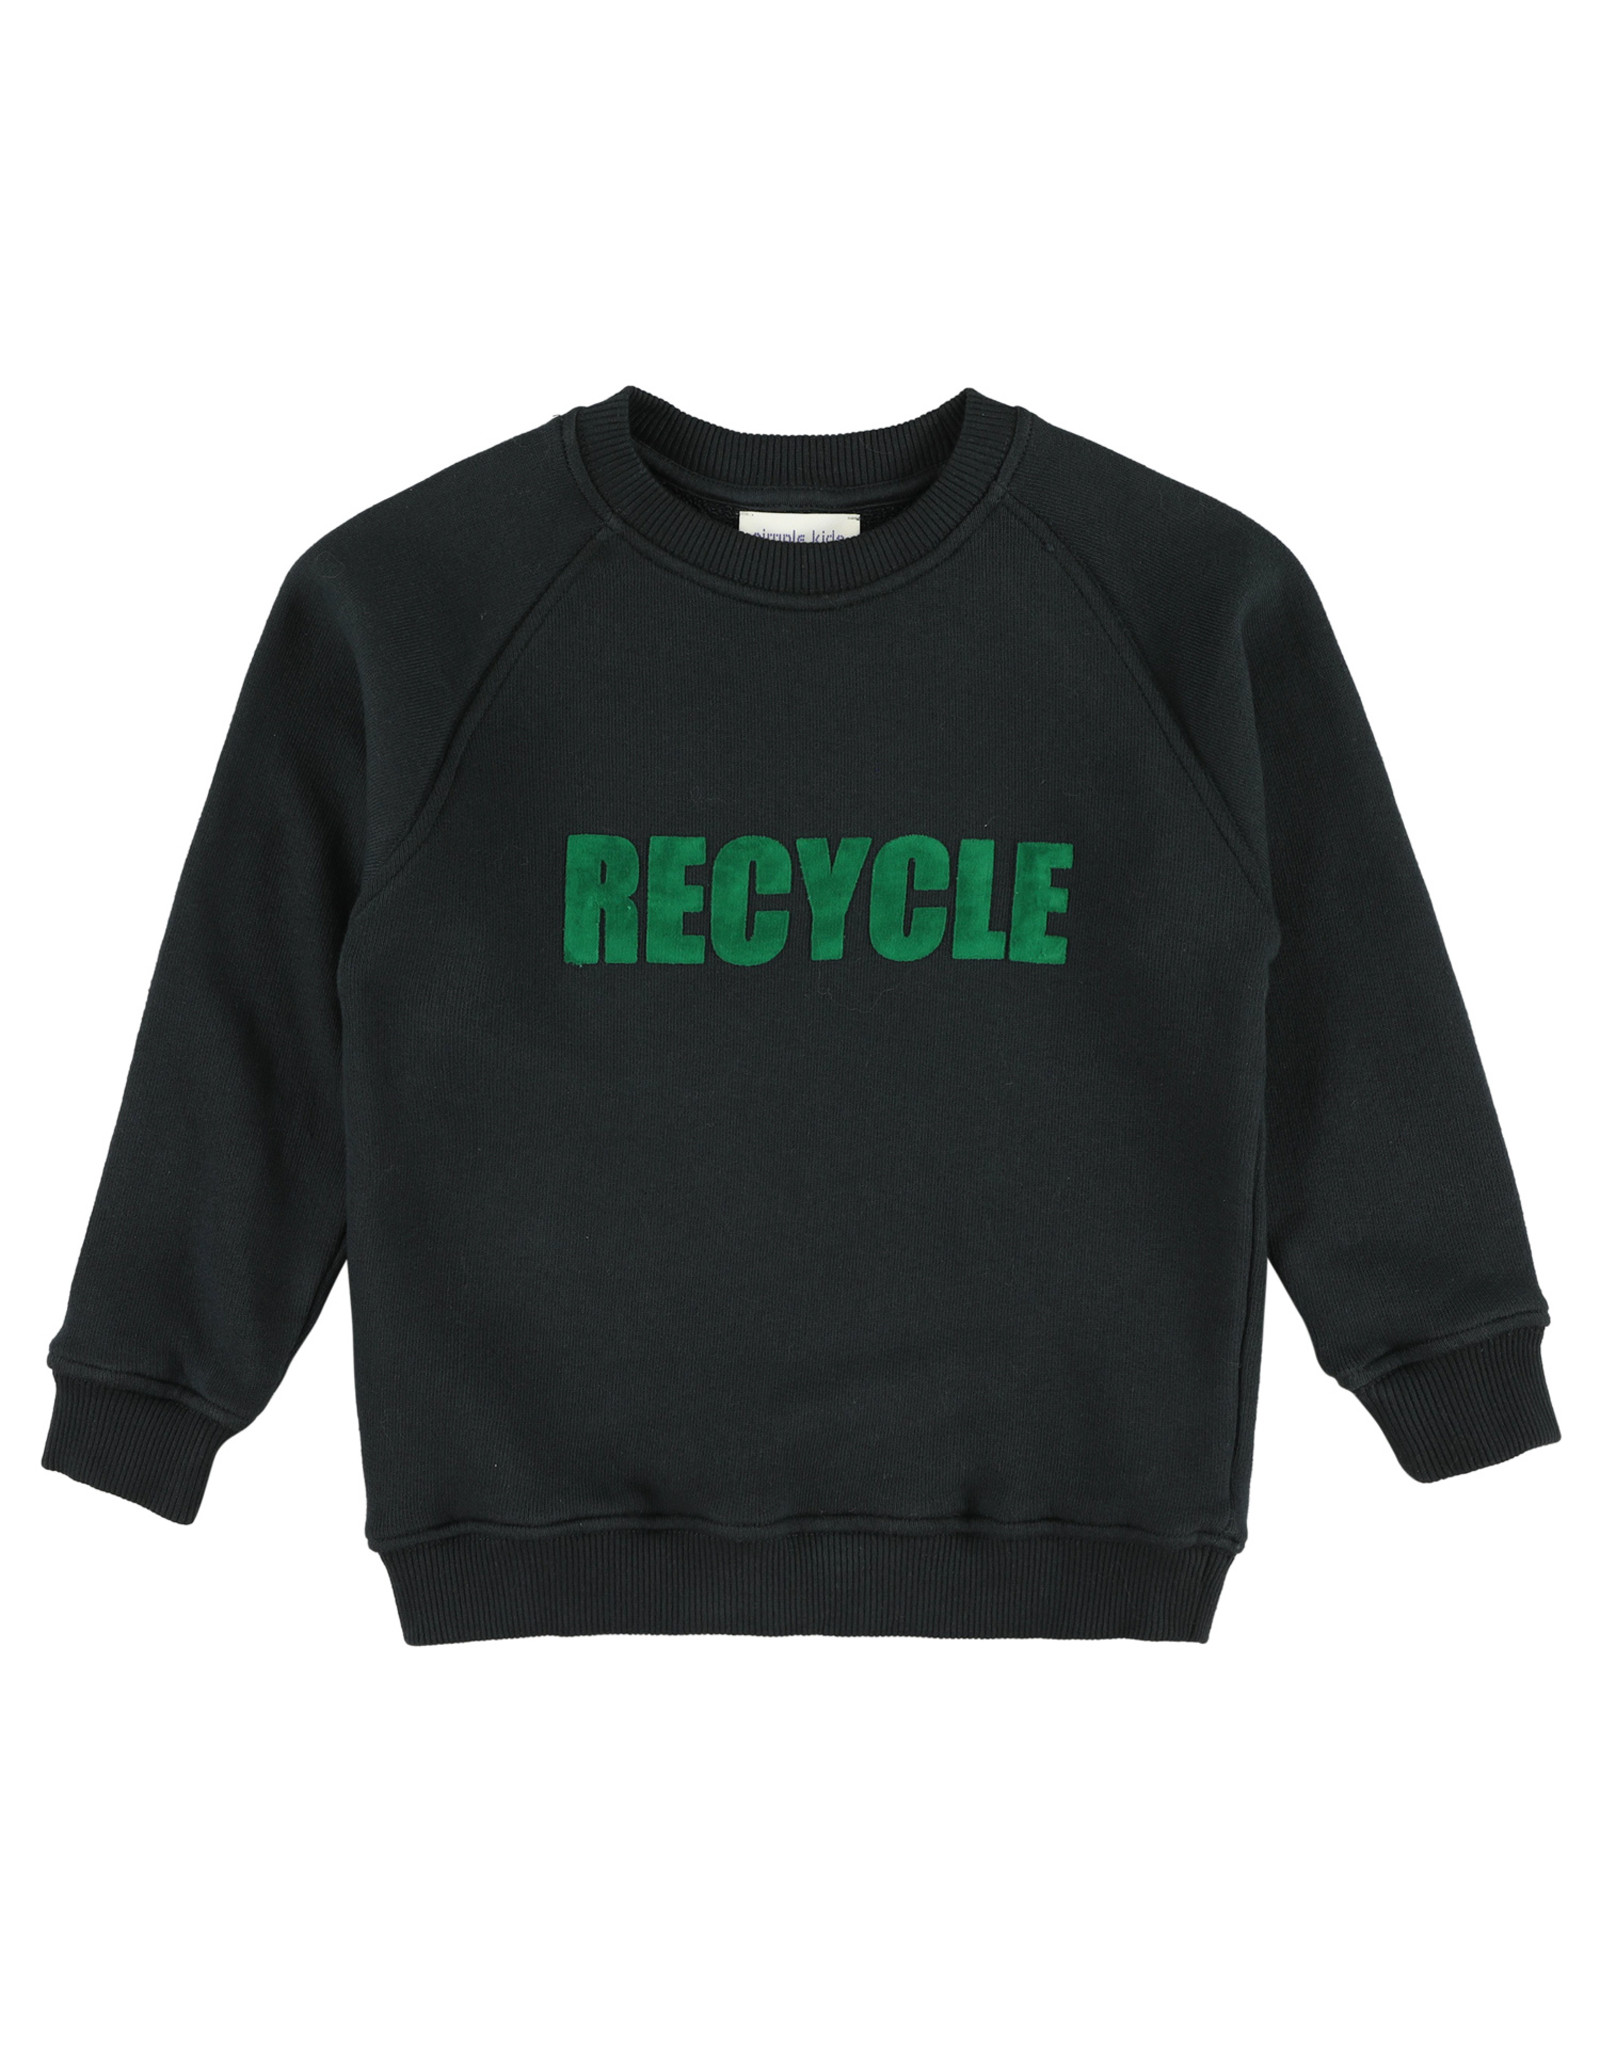 Simple Kids Recycle Sweater coal sweater